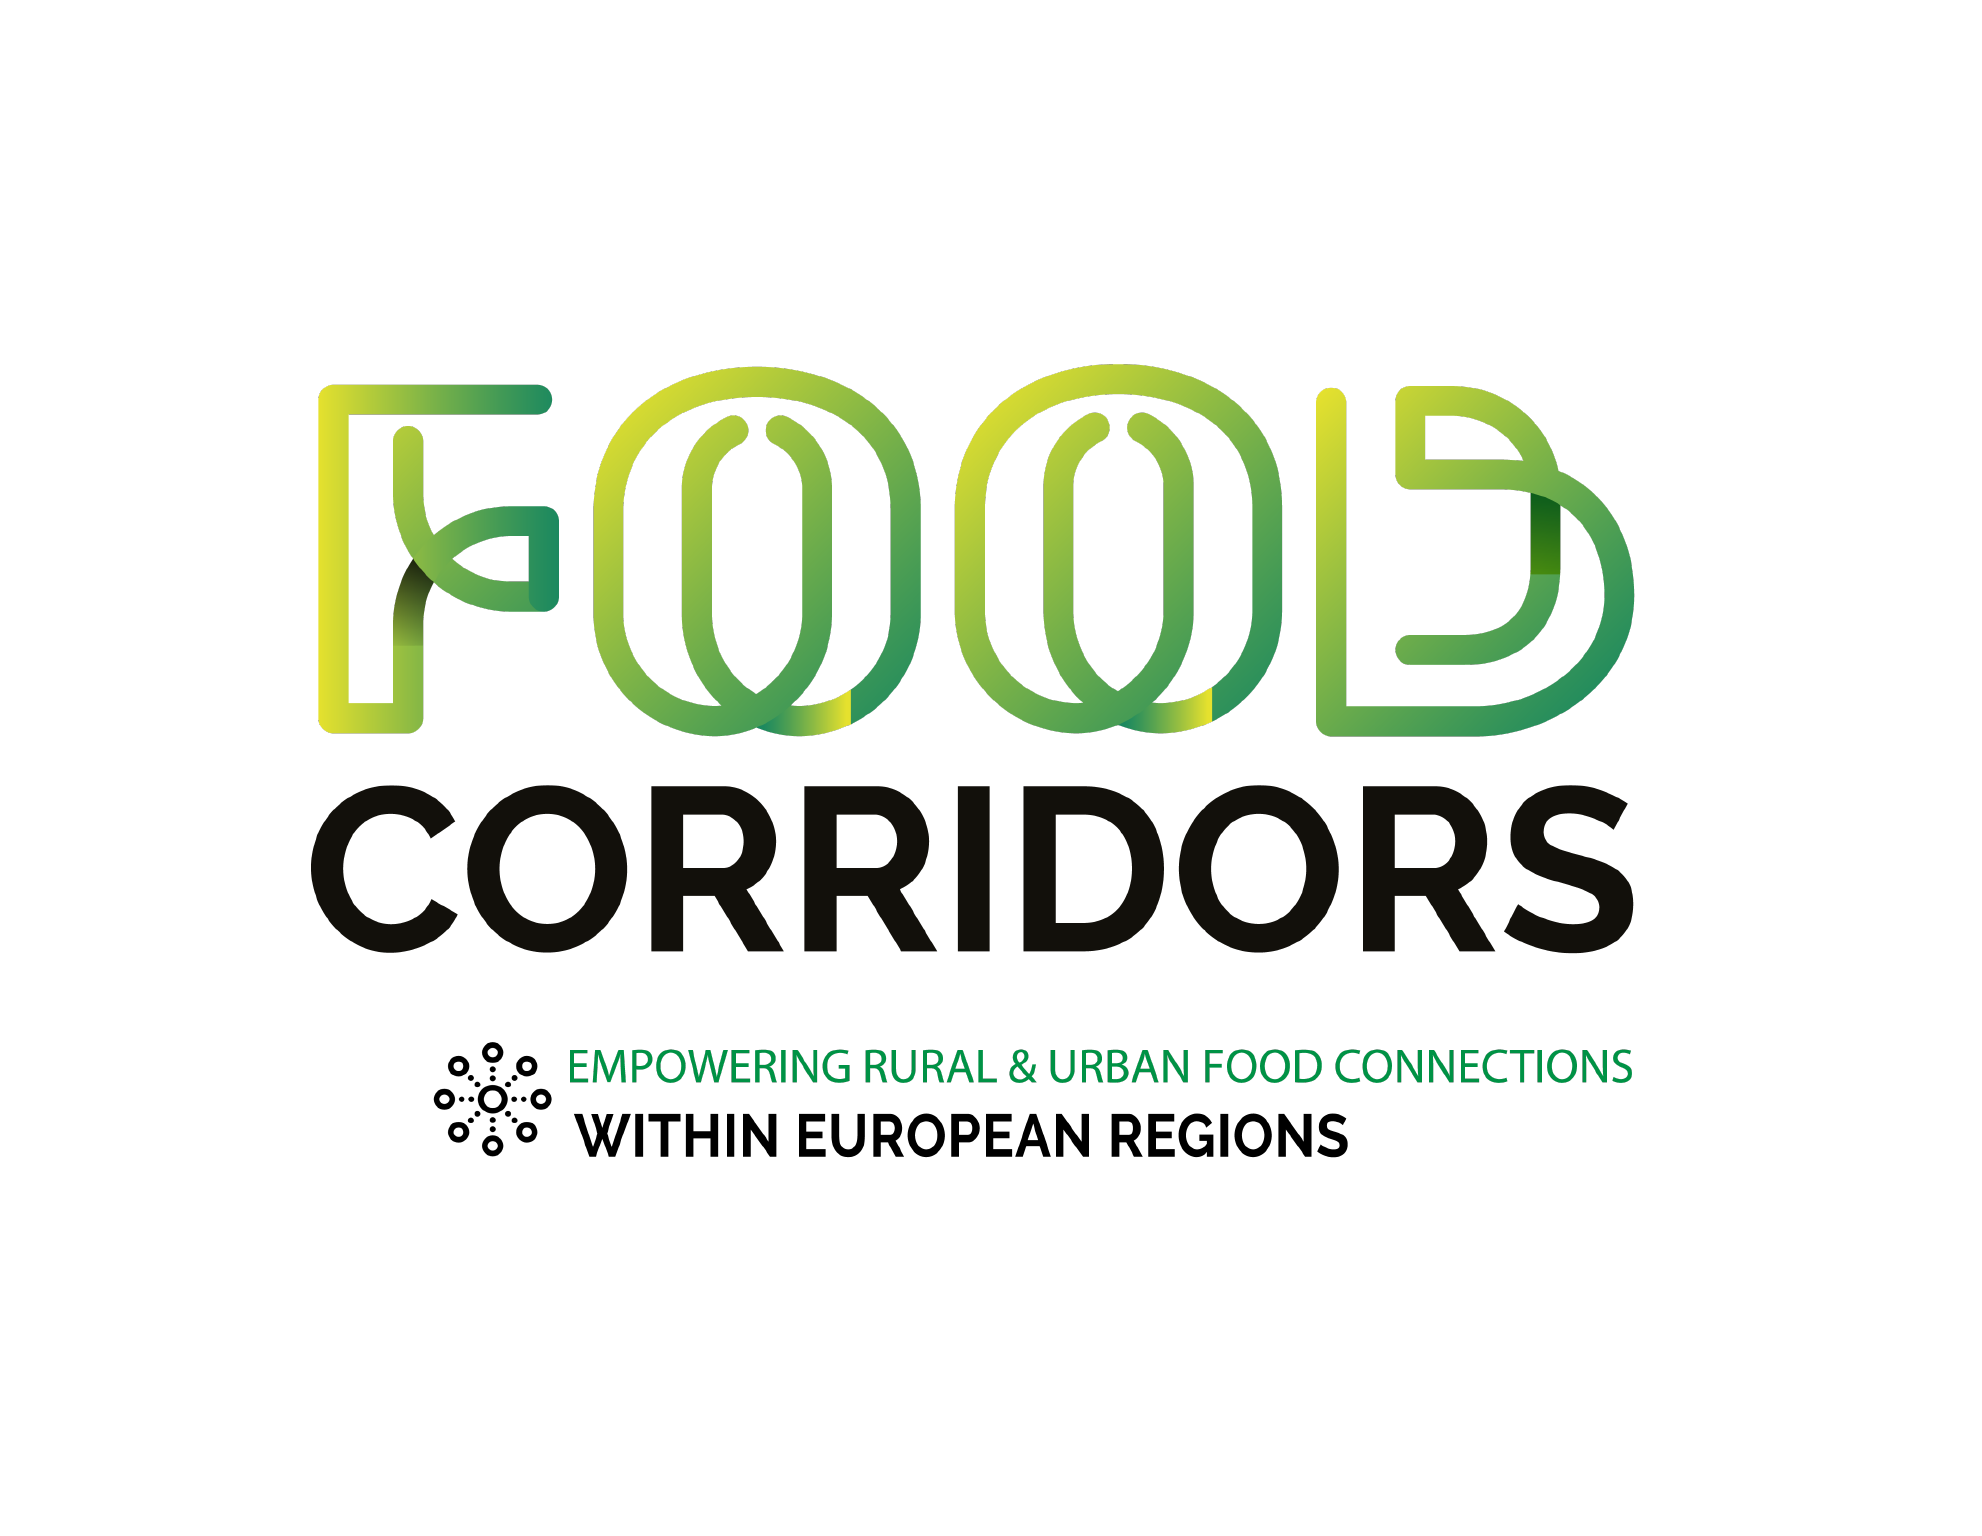 https://urbact.eu/sites/default/files/logo/food_corridors_logo.png.png